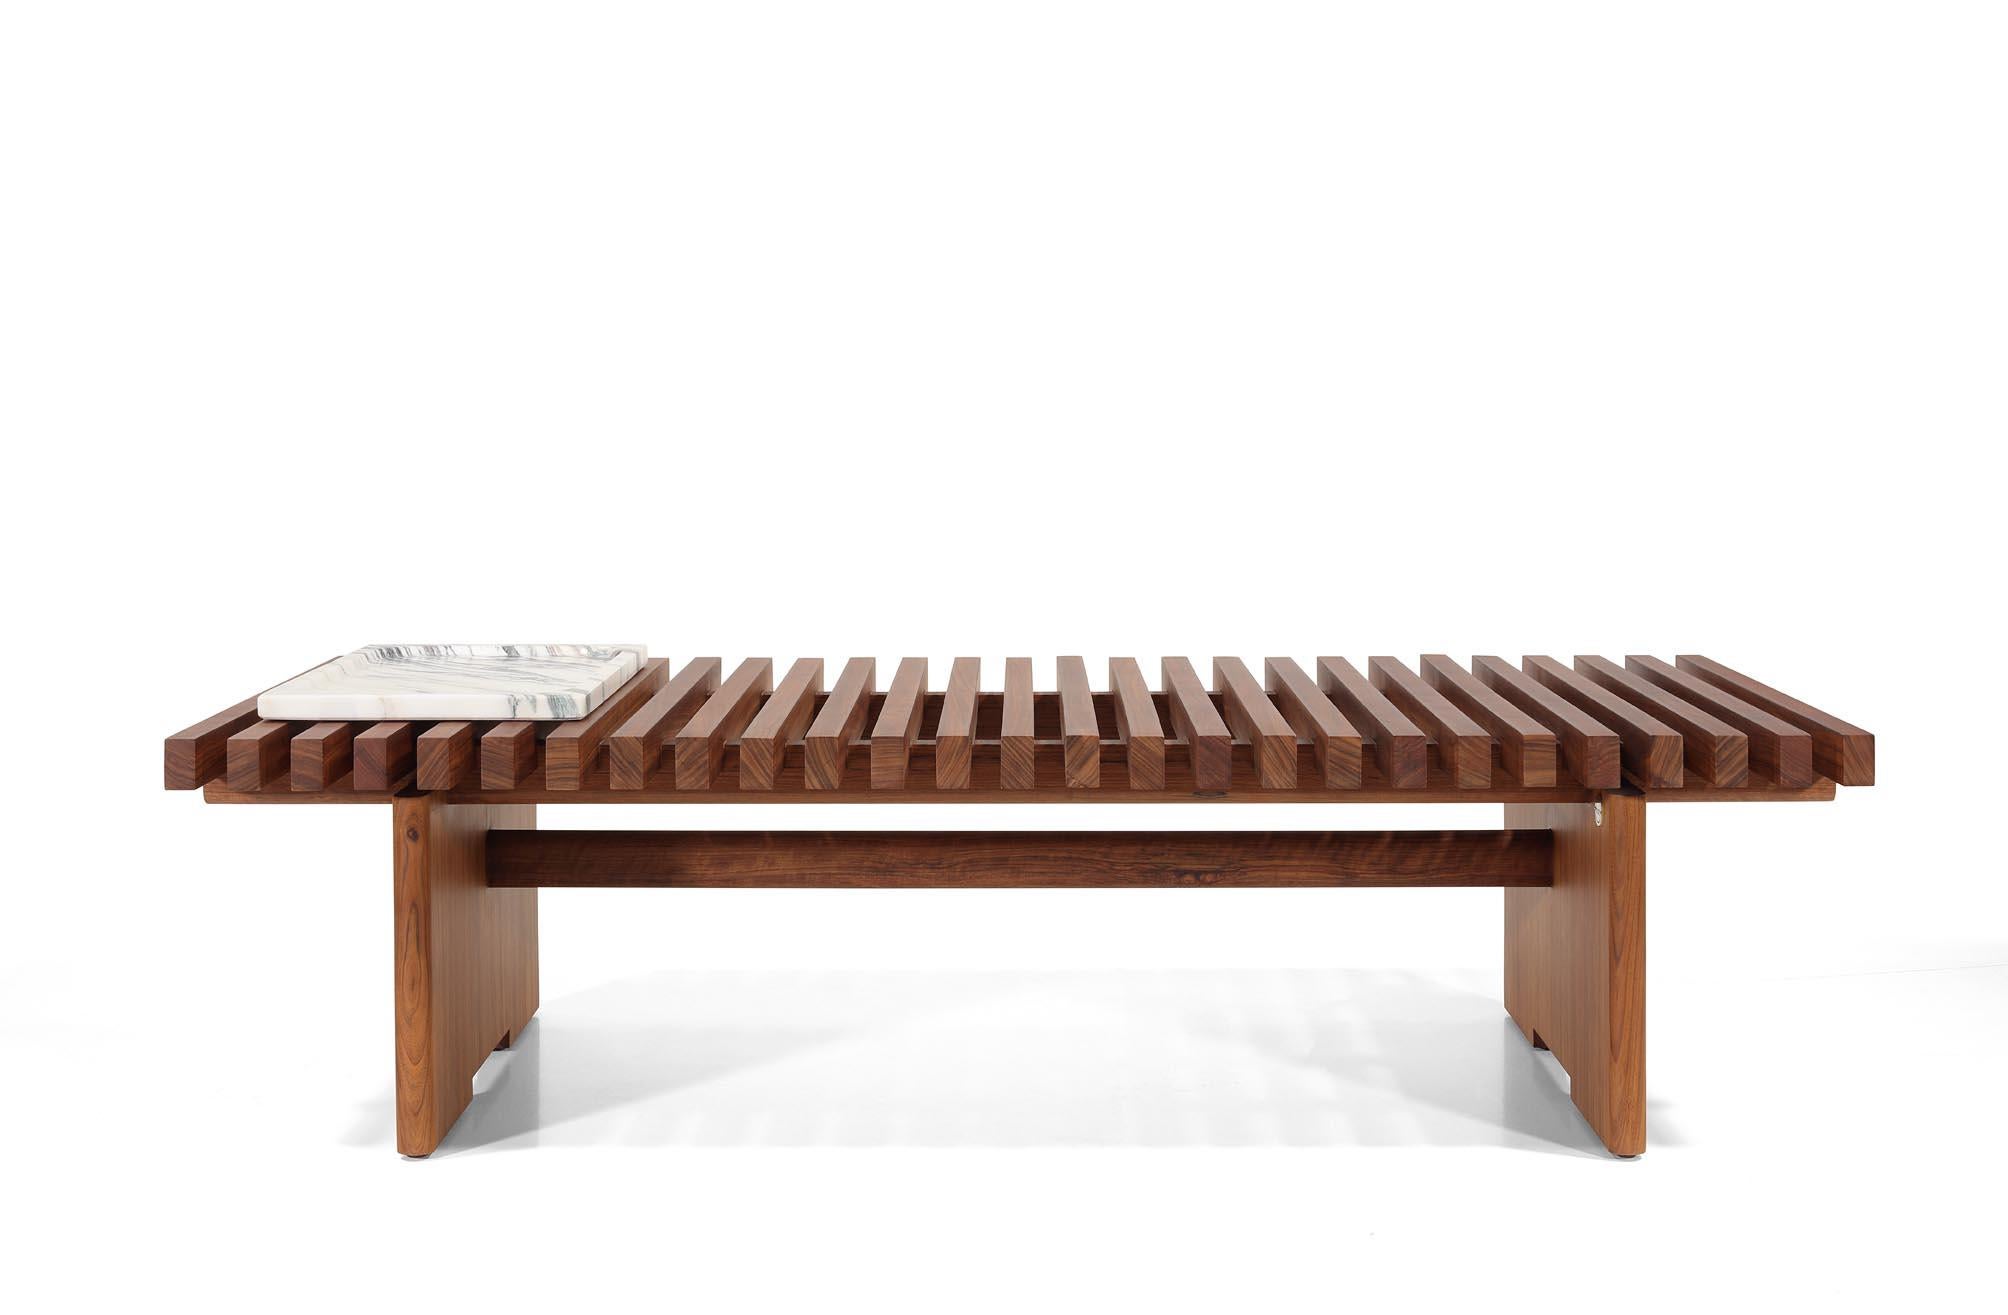 Wood Nokogiri Coffee Table Bench - 130cm + Cushion For Sale